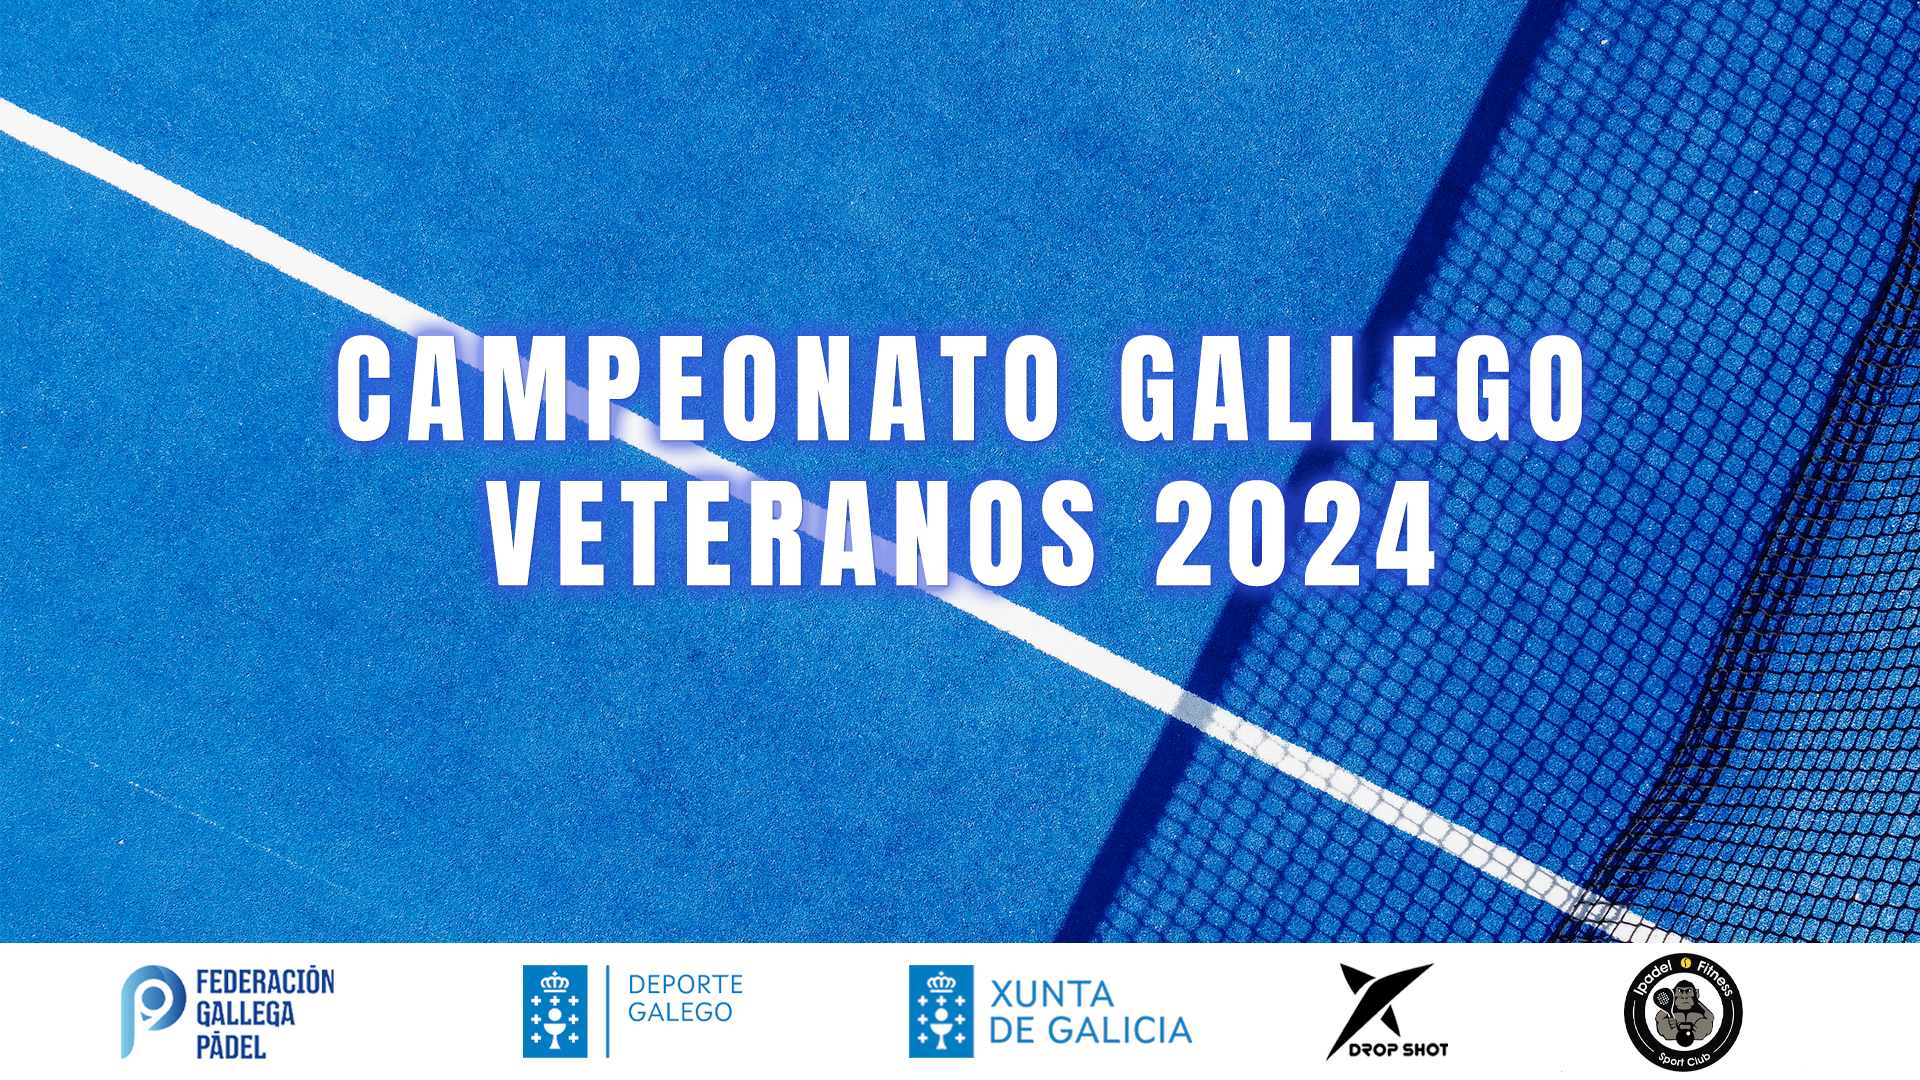 Campeonato Gallego Veteranos 2024